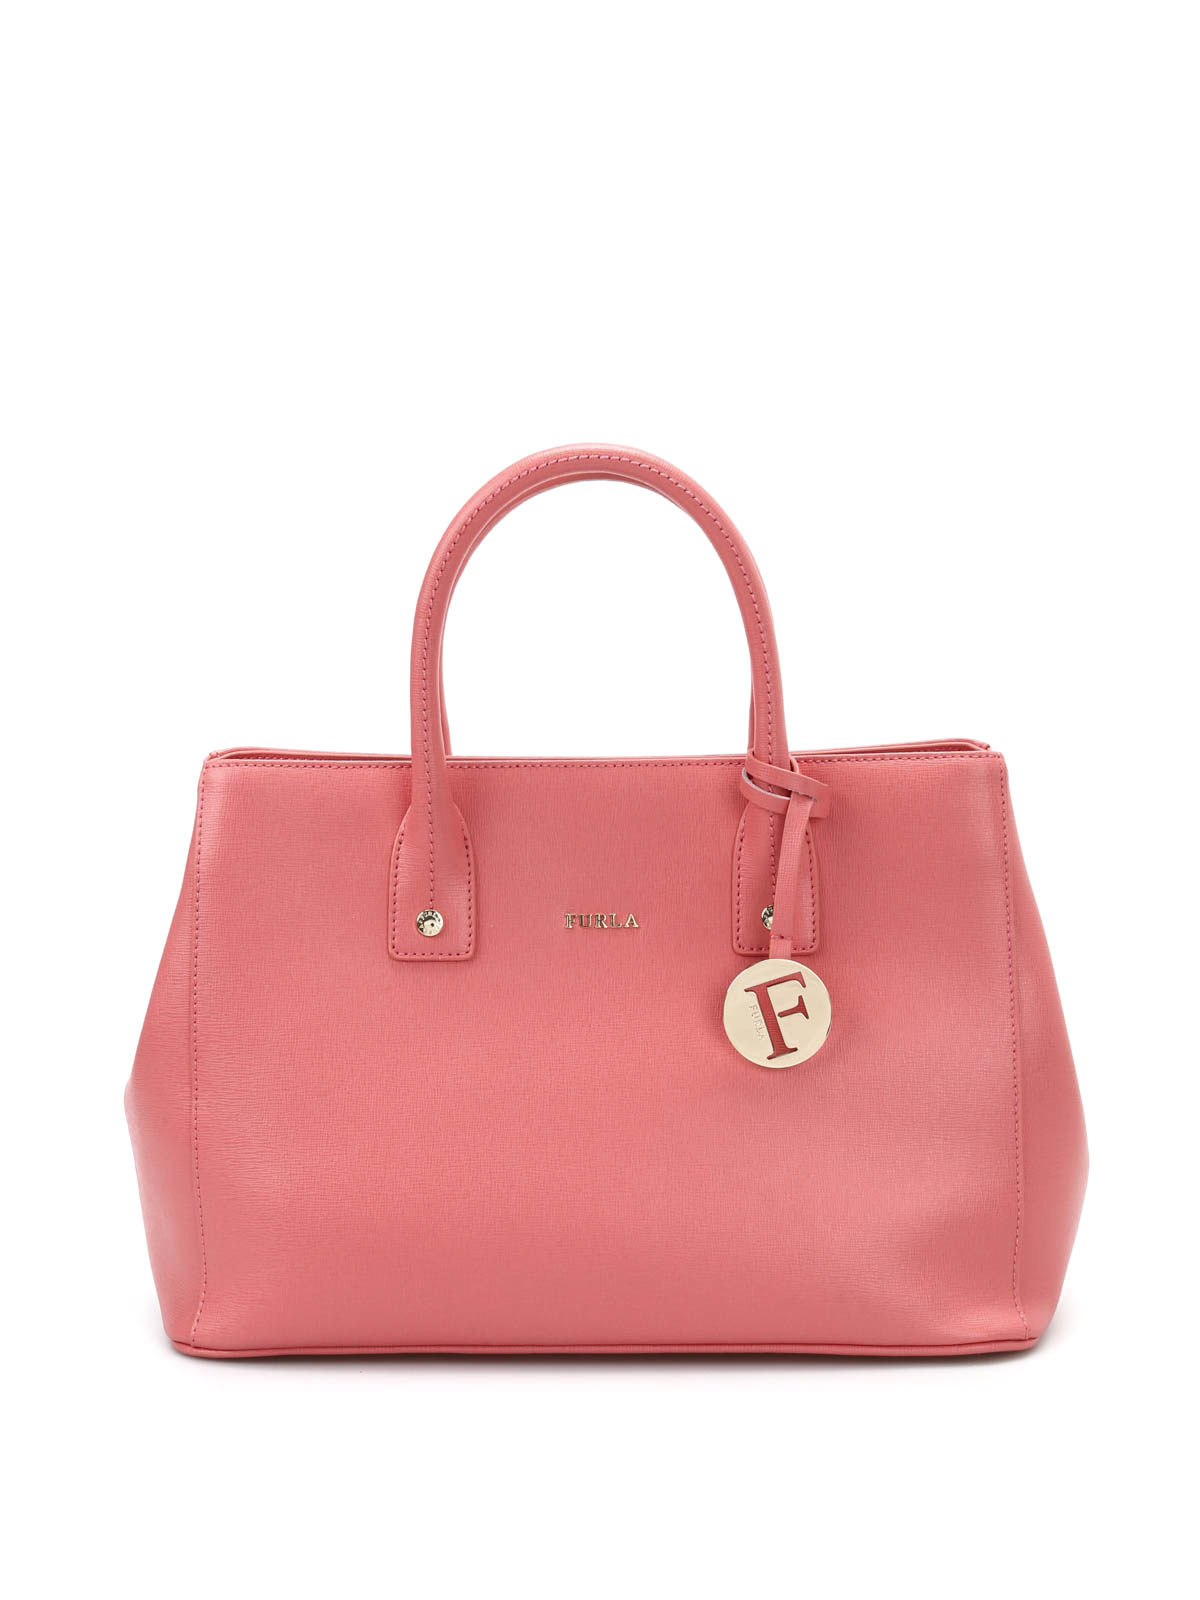 Totes bags Furla - Linda tote bag - 794207CORALLO | Shop online at 